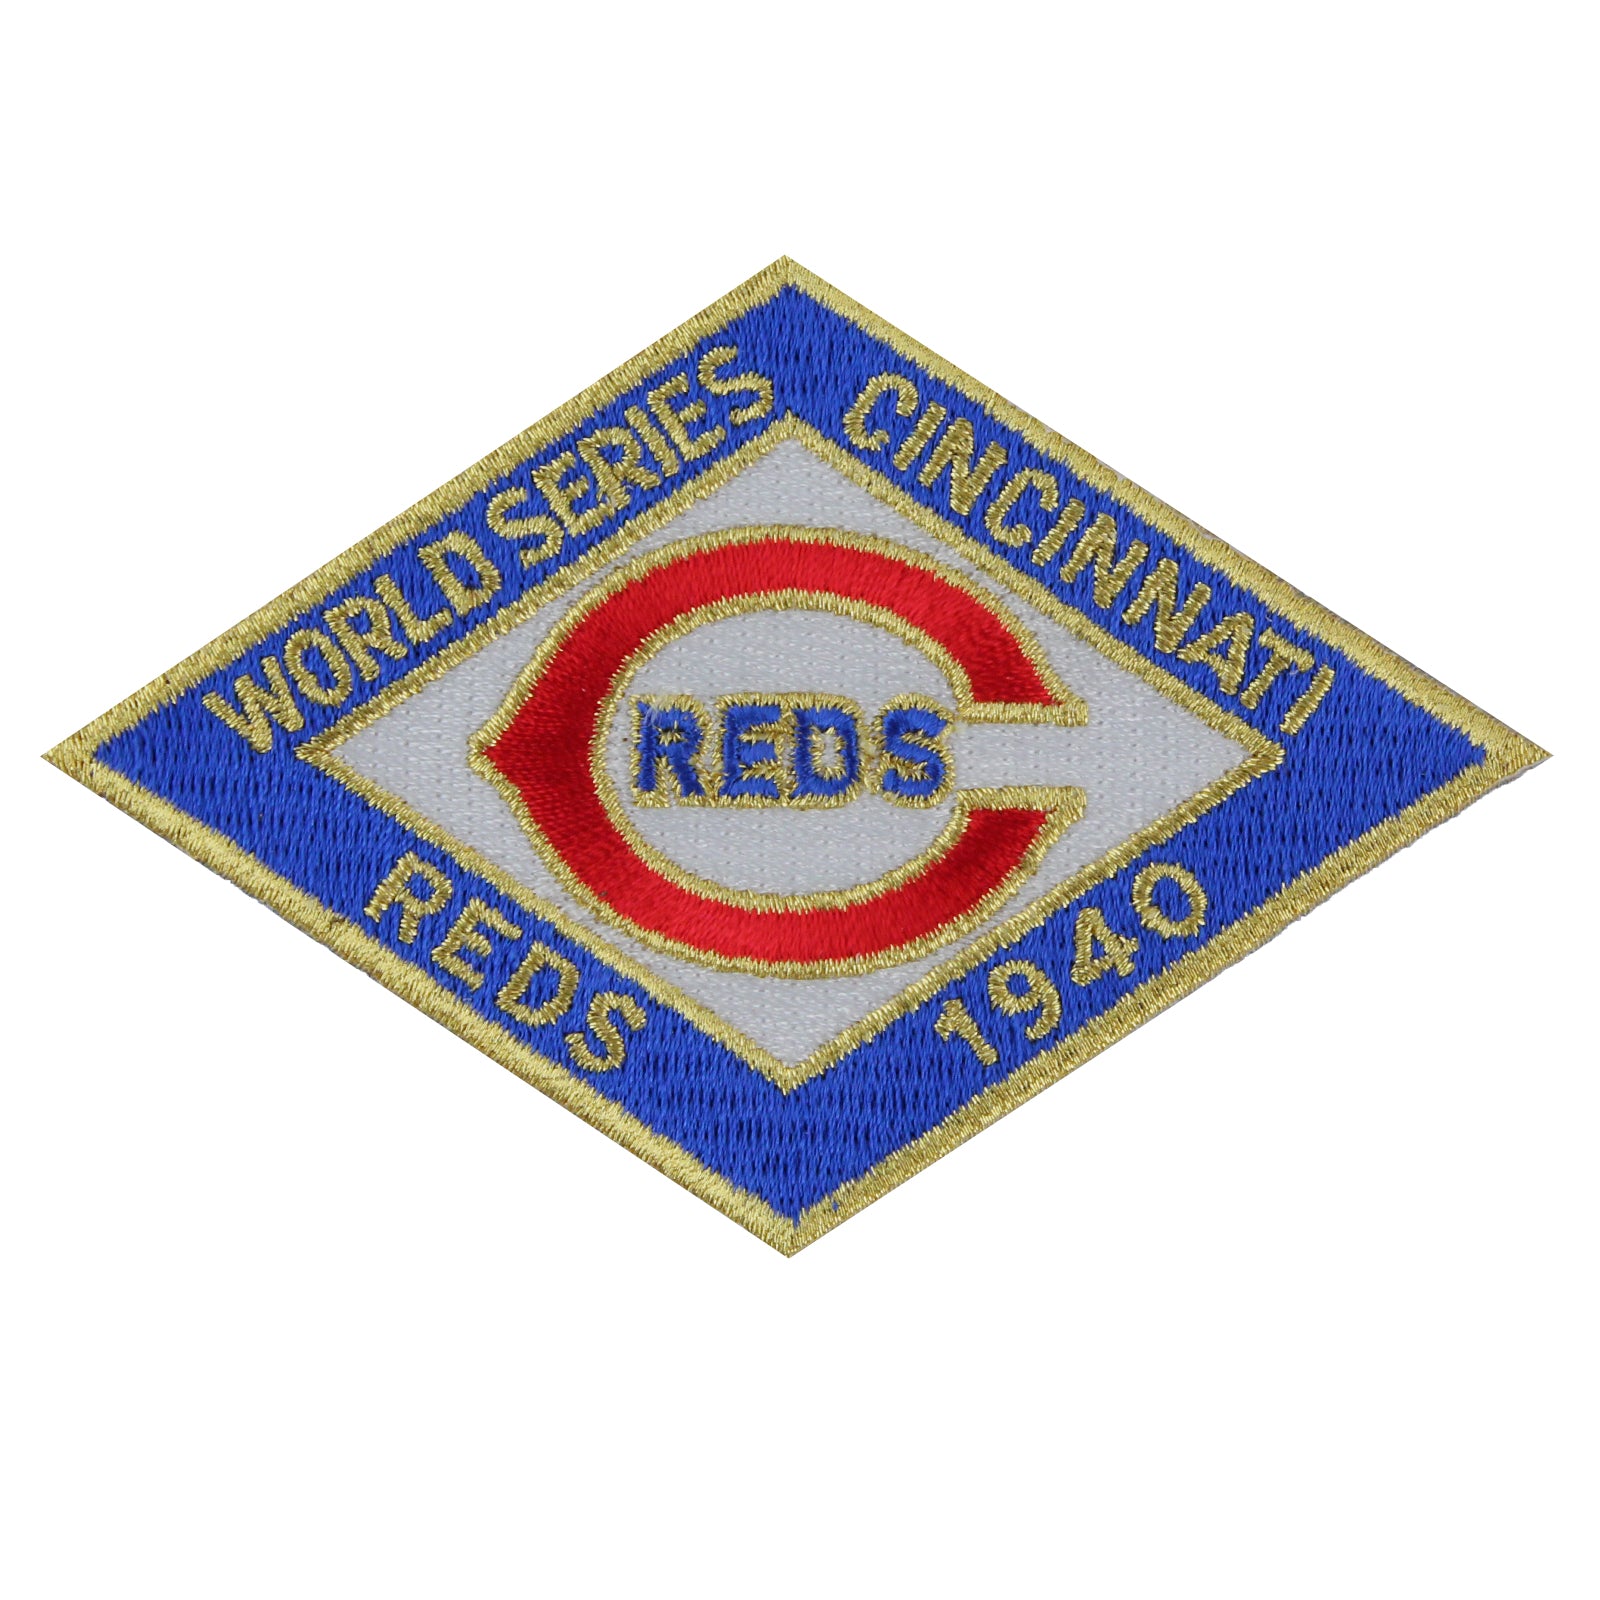 Cincinnati Reds Lilo & Stitch Jersey - White